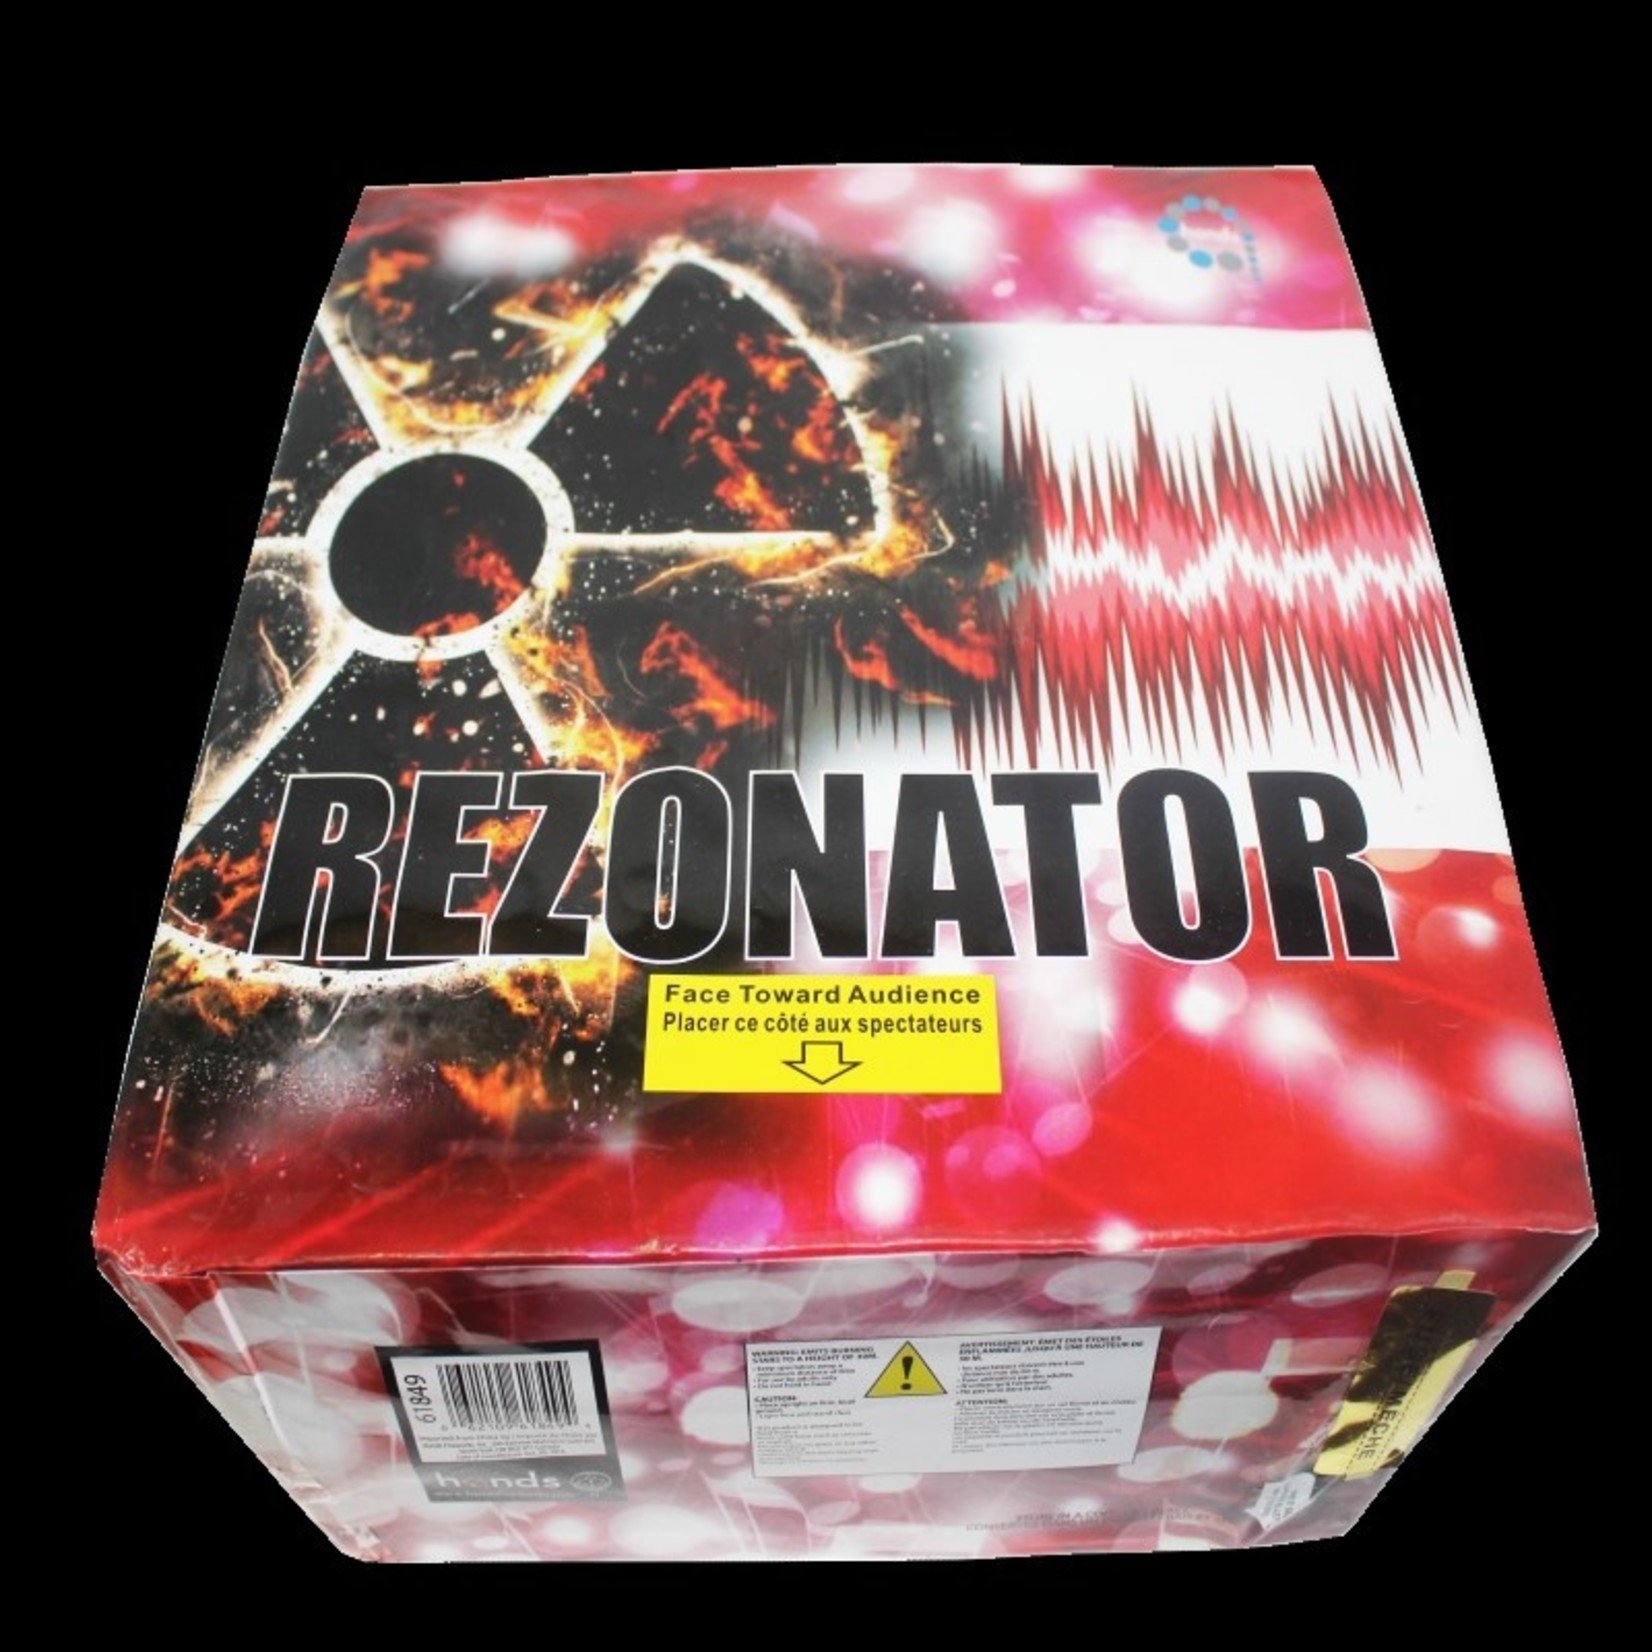 The Rezonator